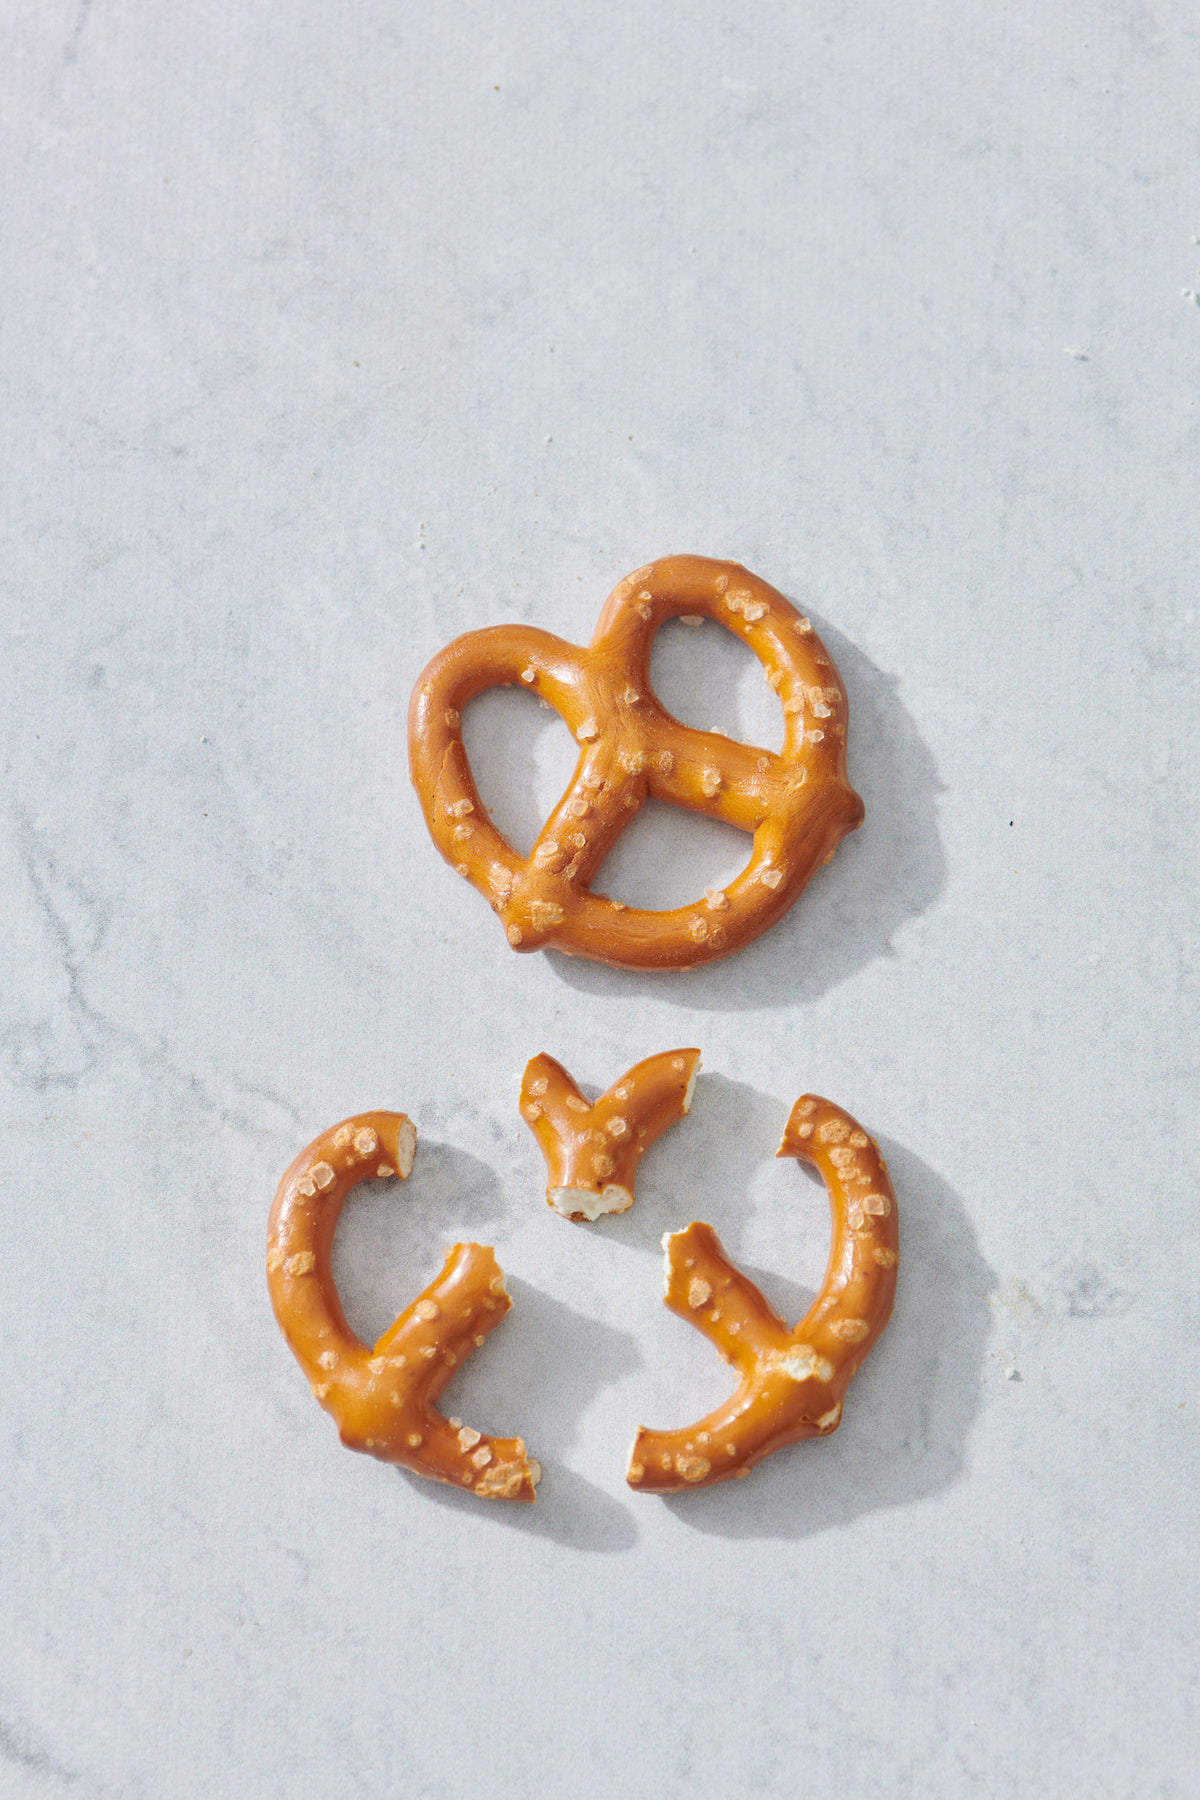 Whole pretzel with pretzel cut in half below.